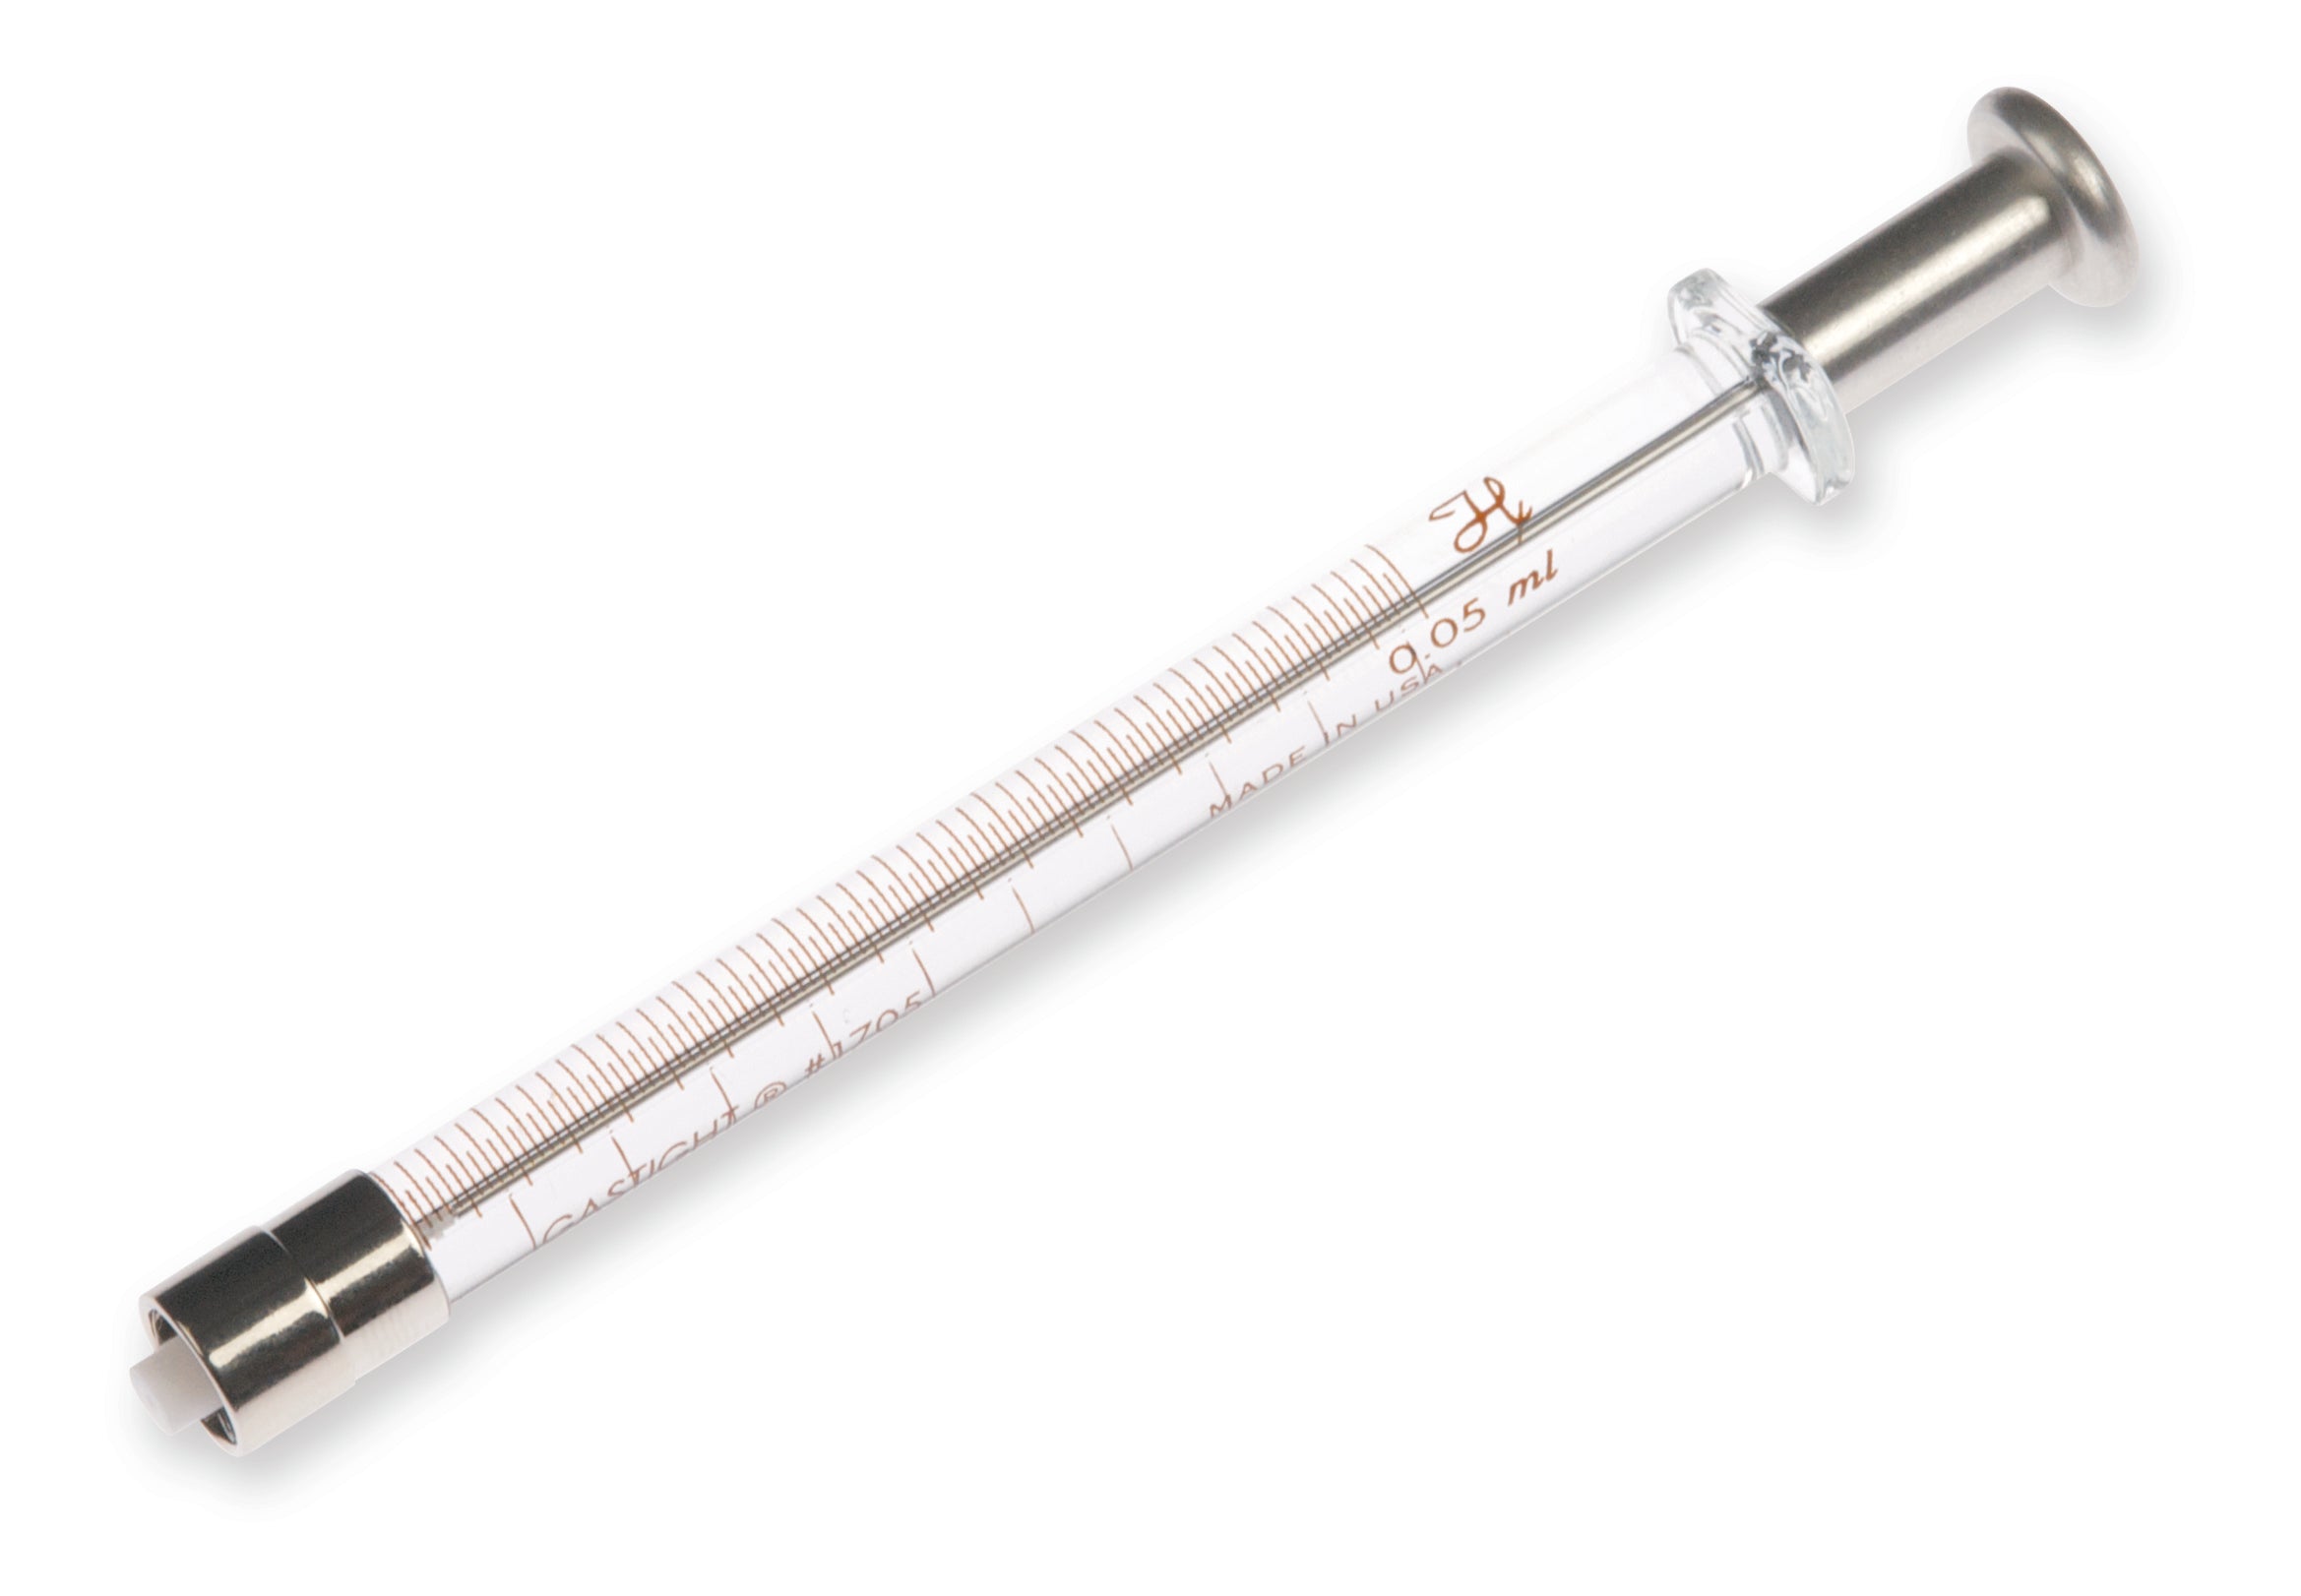 50 µL, Model 1705 TLLX SYR, Instrument Syringe